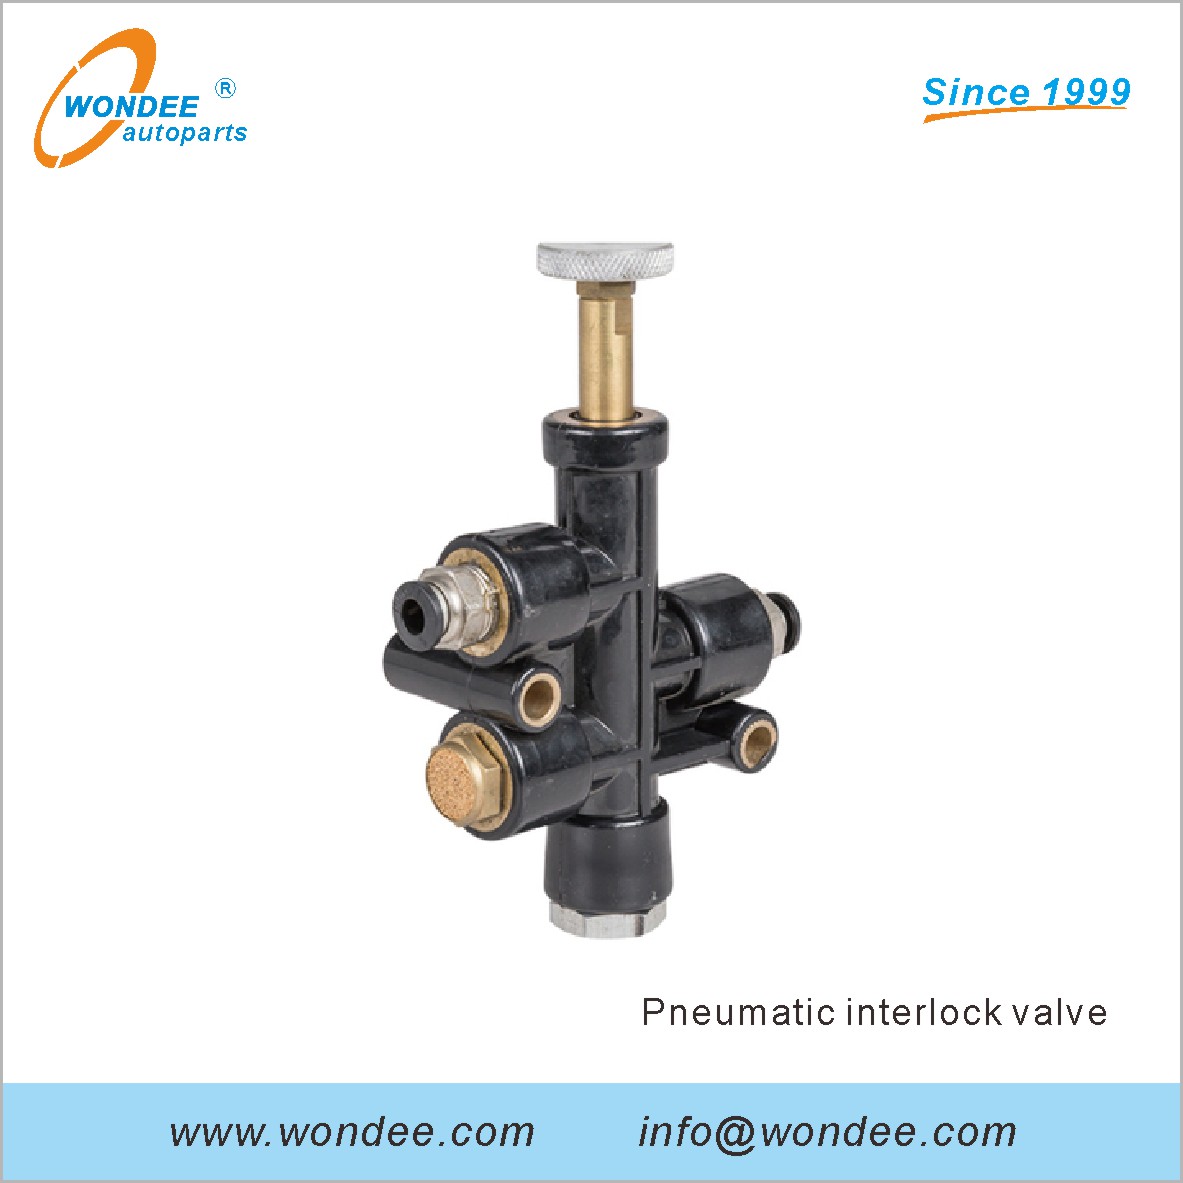 Pneumatic interlock valve